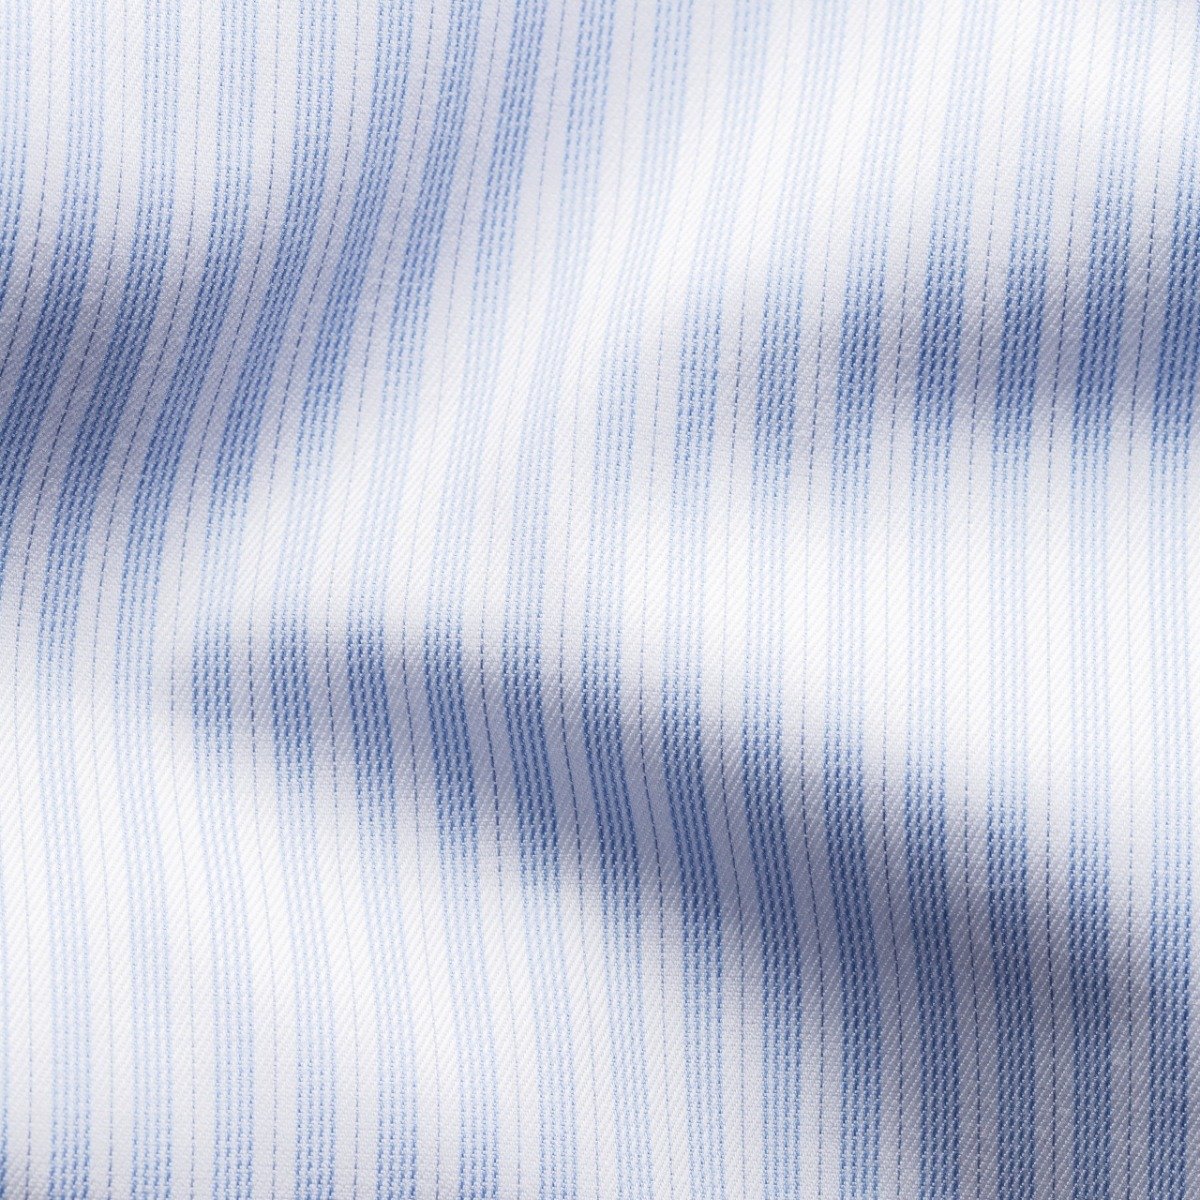 Eton light blue slim fit striped cotton lyocell stretch men's dress shirt